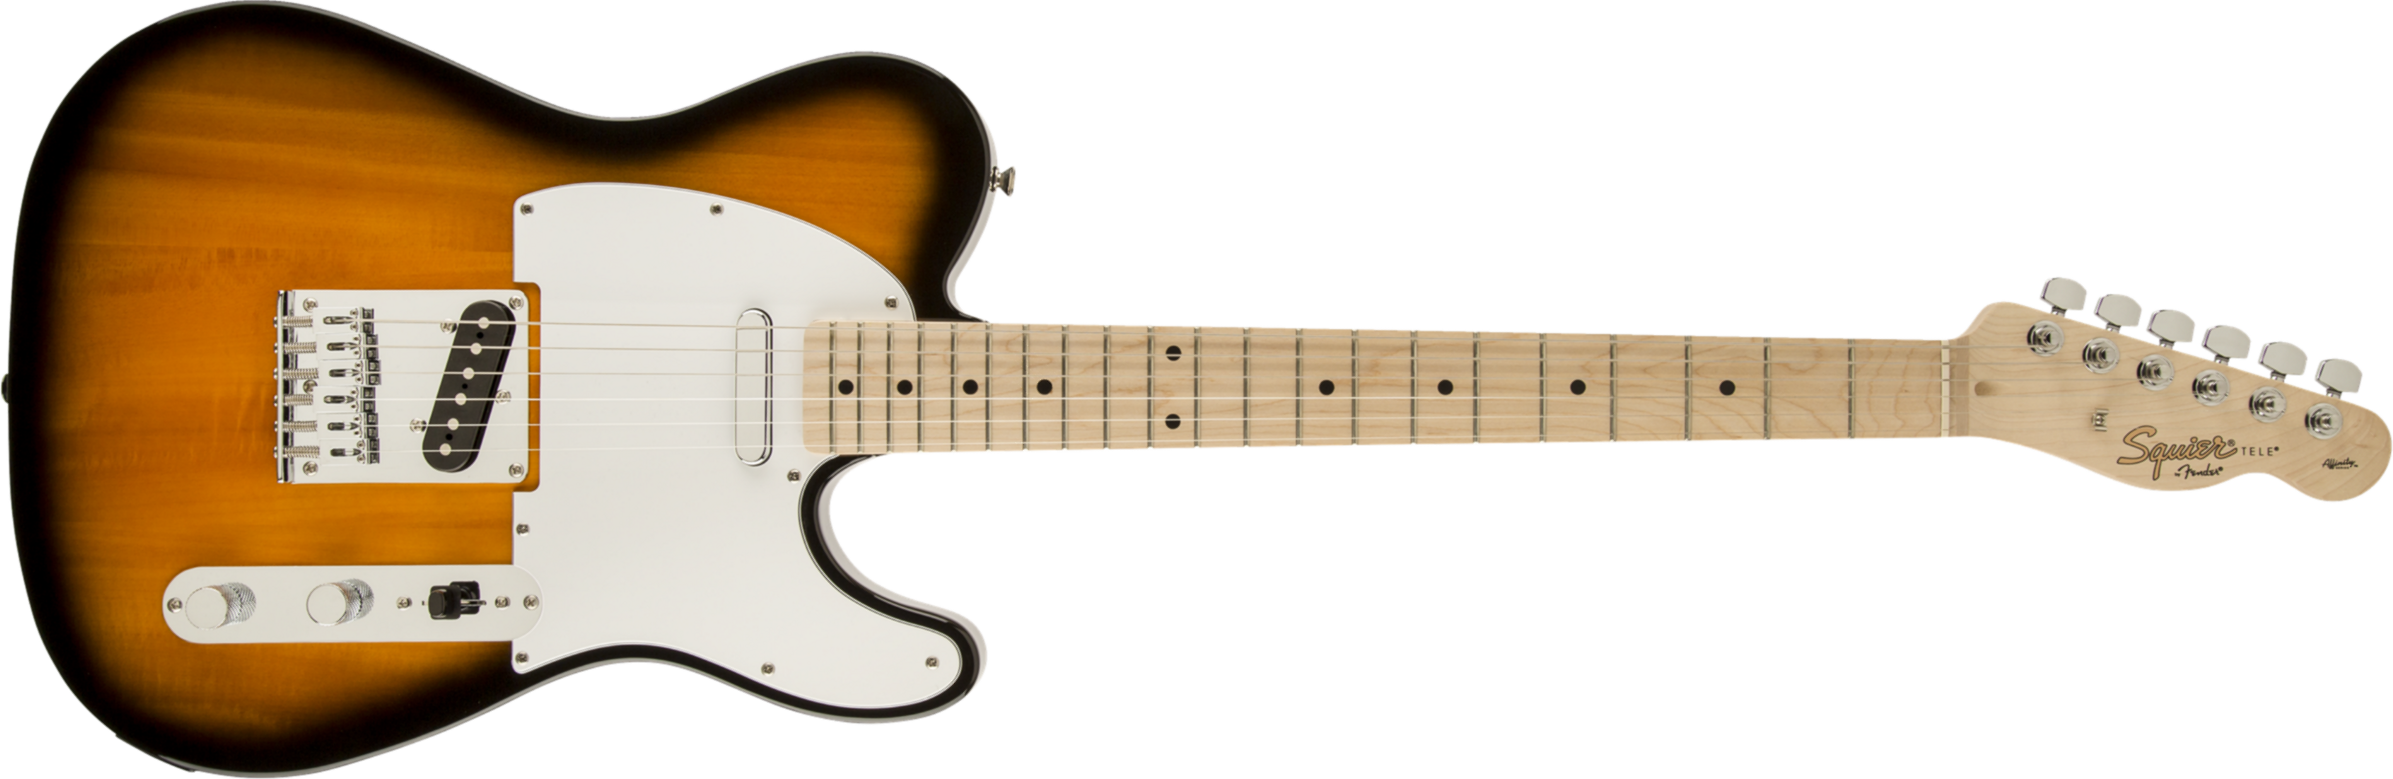 Squier Tele Affinity Series Mn - 2-color Sunburst - Televorm elektrische gitaar - Main picture